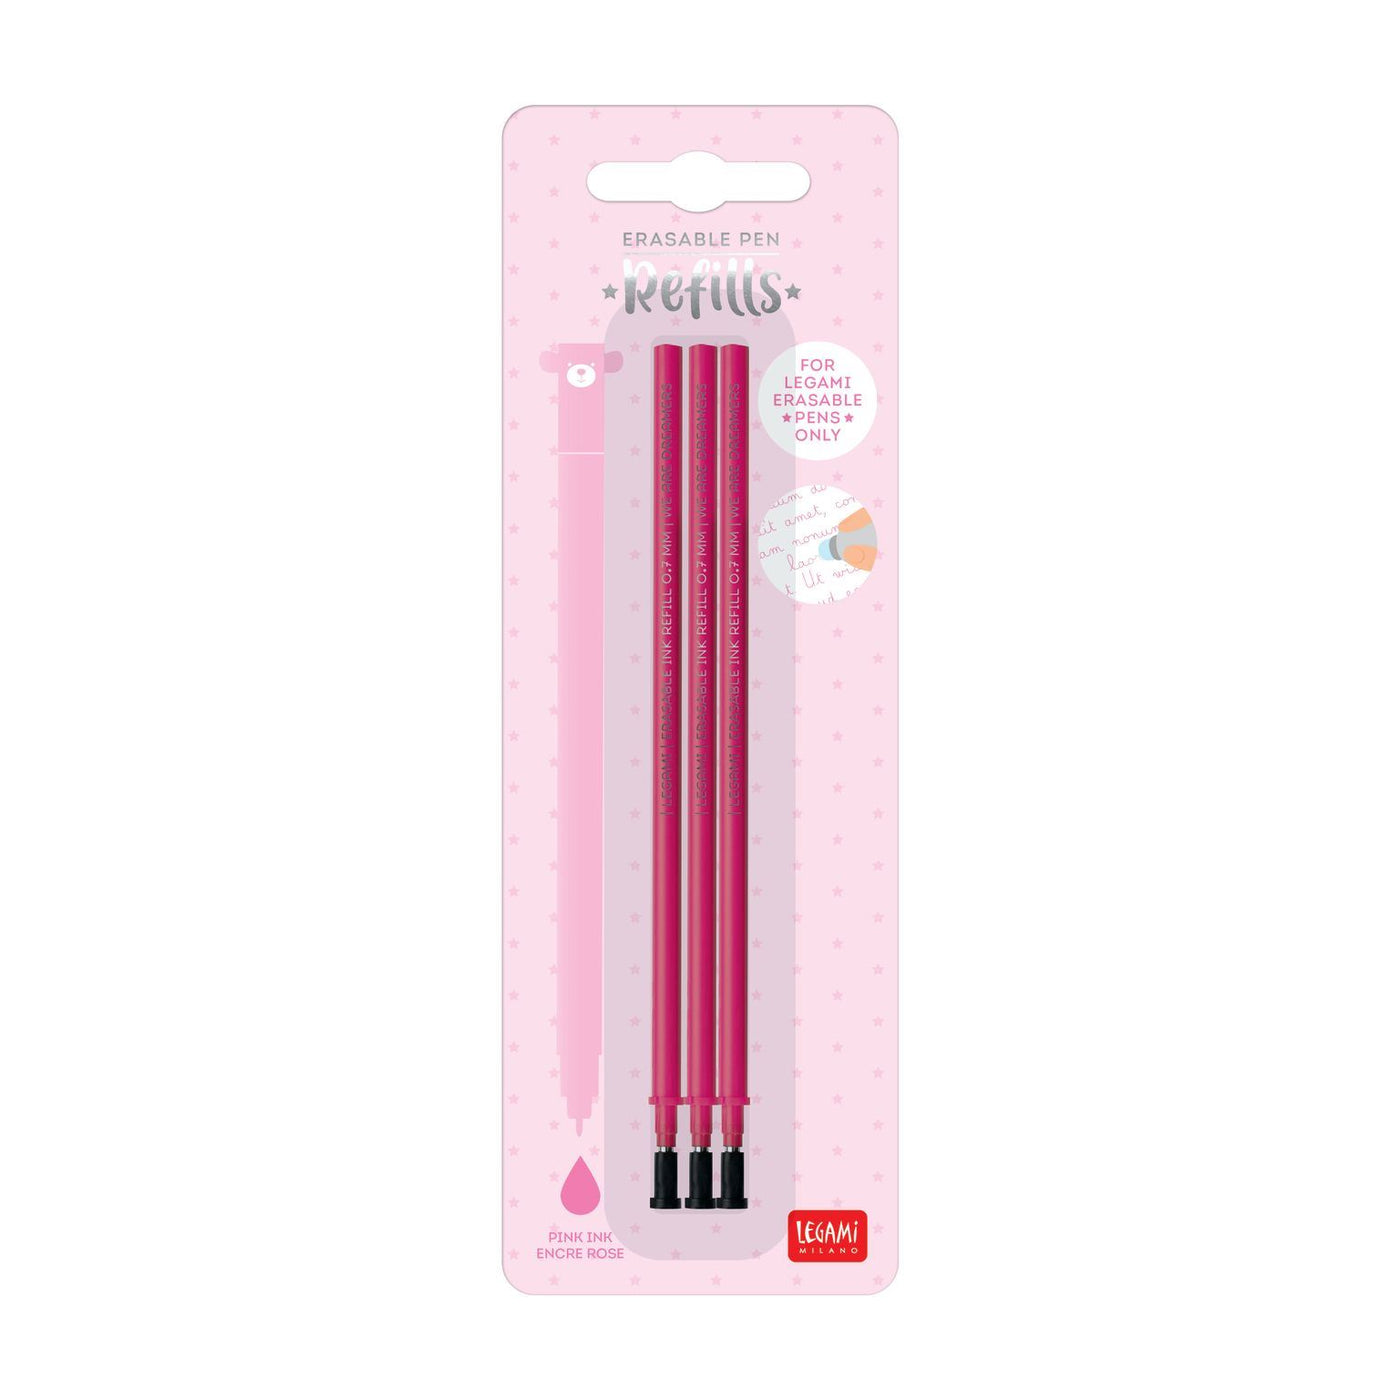 Legami Pink Erasable Gel Pen Refills - 3 Pack